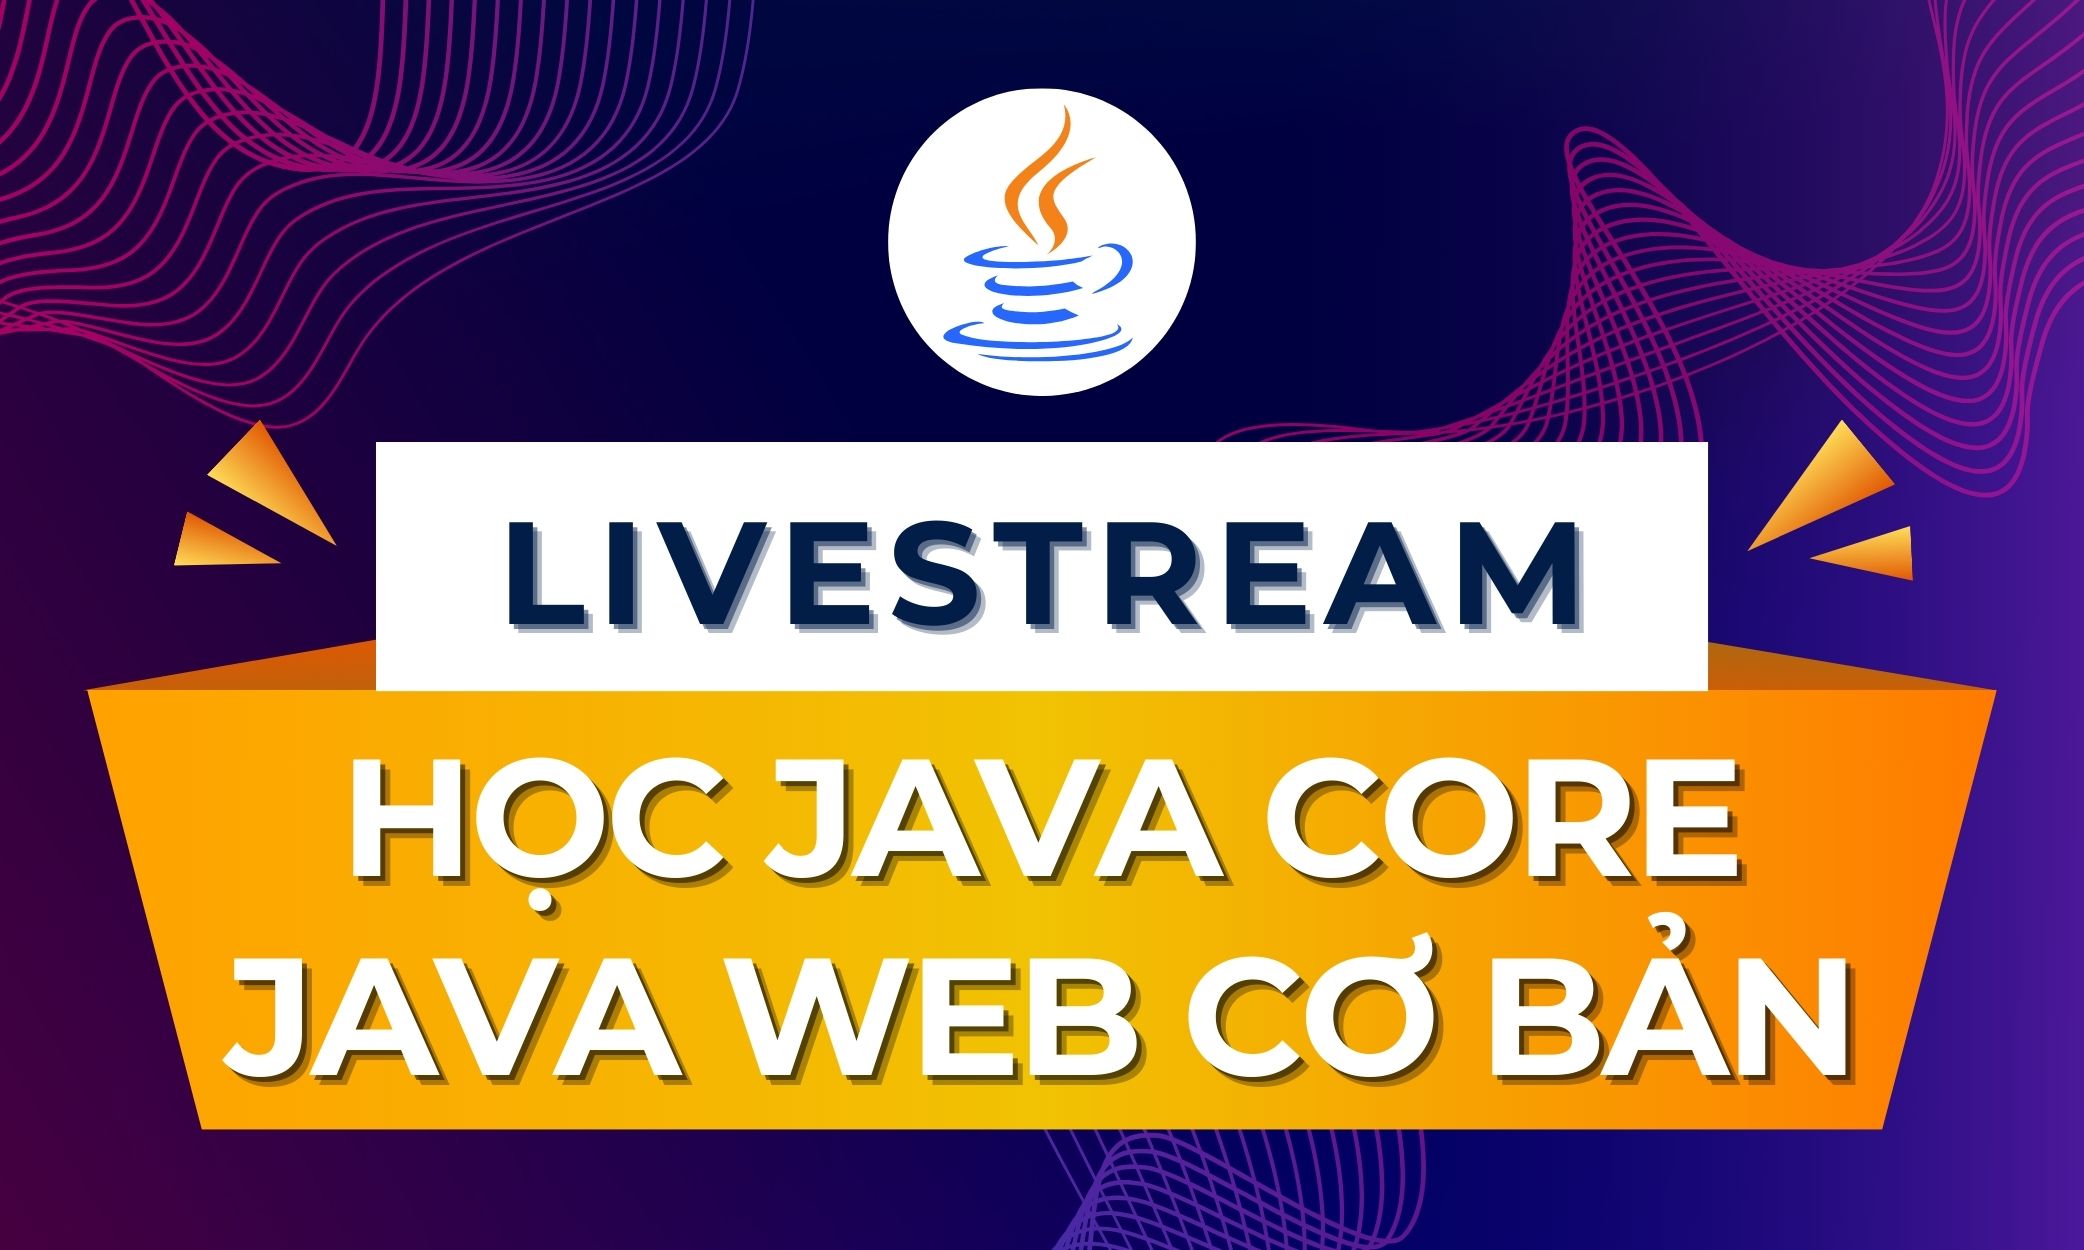 Livestream học Java core, Java web cơ bản